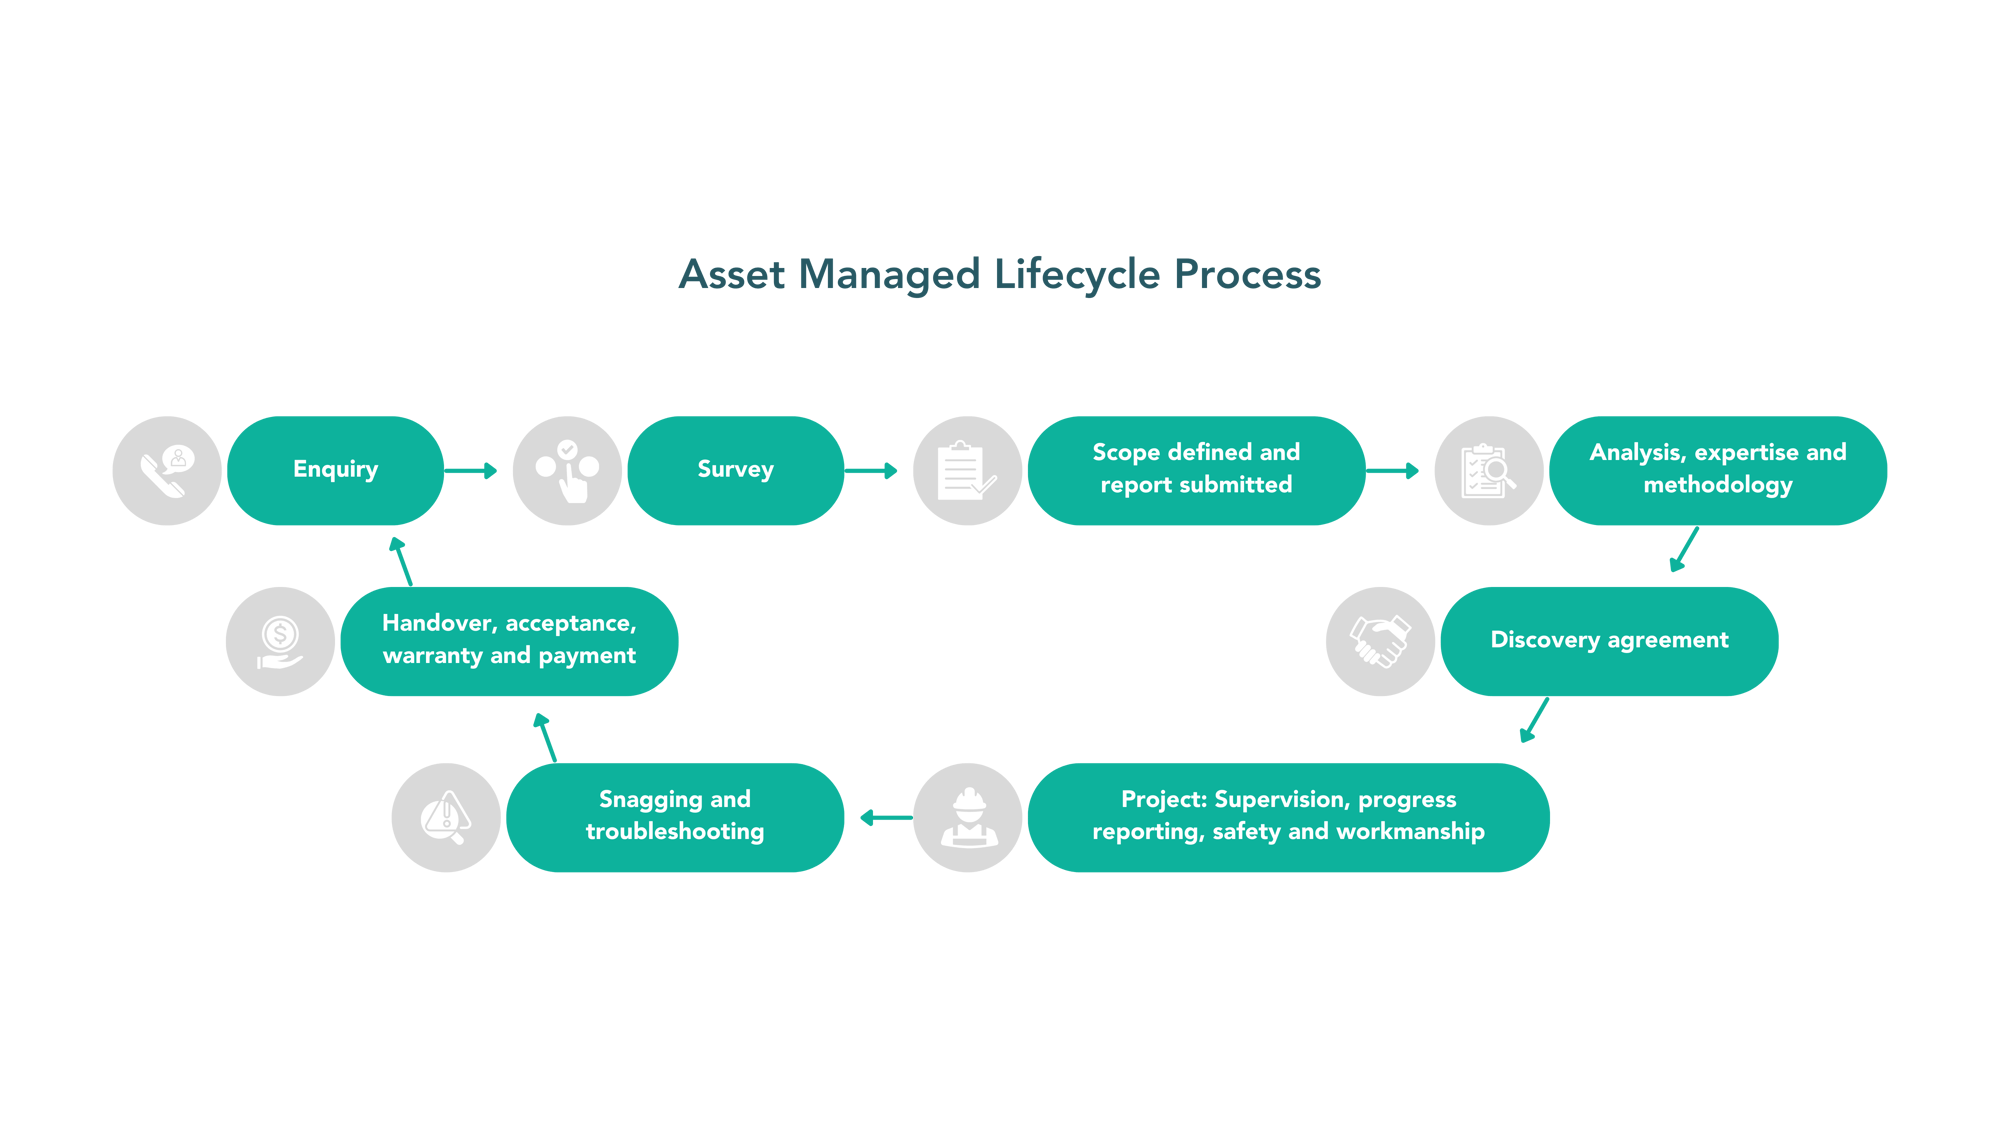 StoncorSA_Asset Managed Lifecycle Process